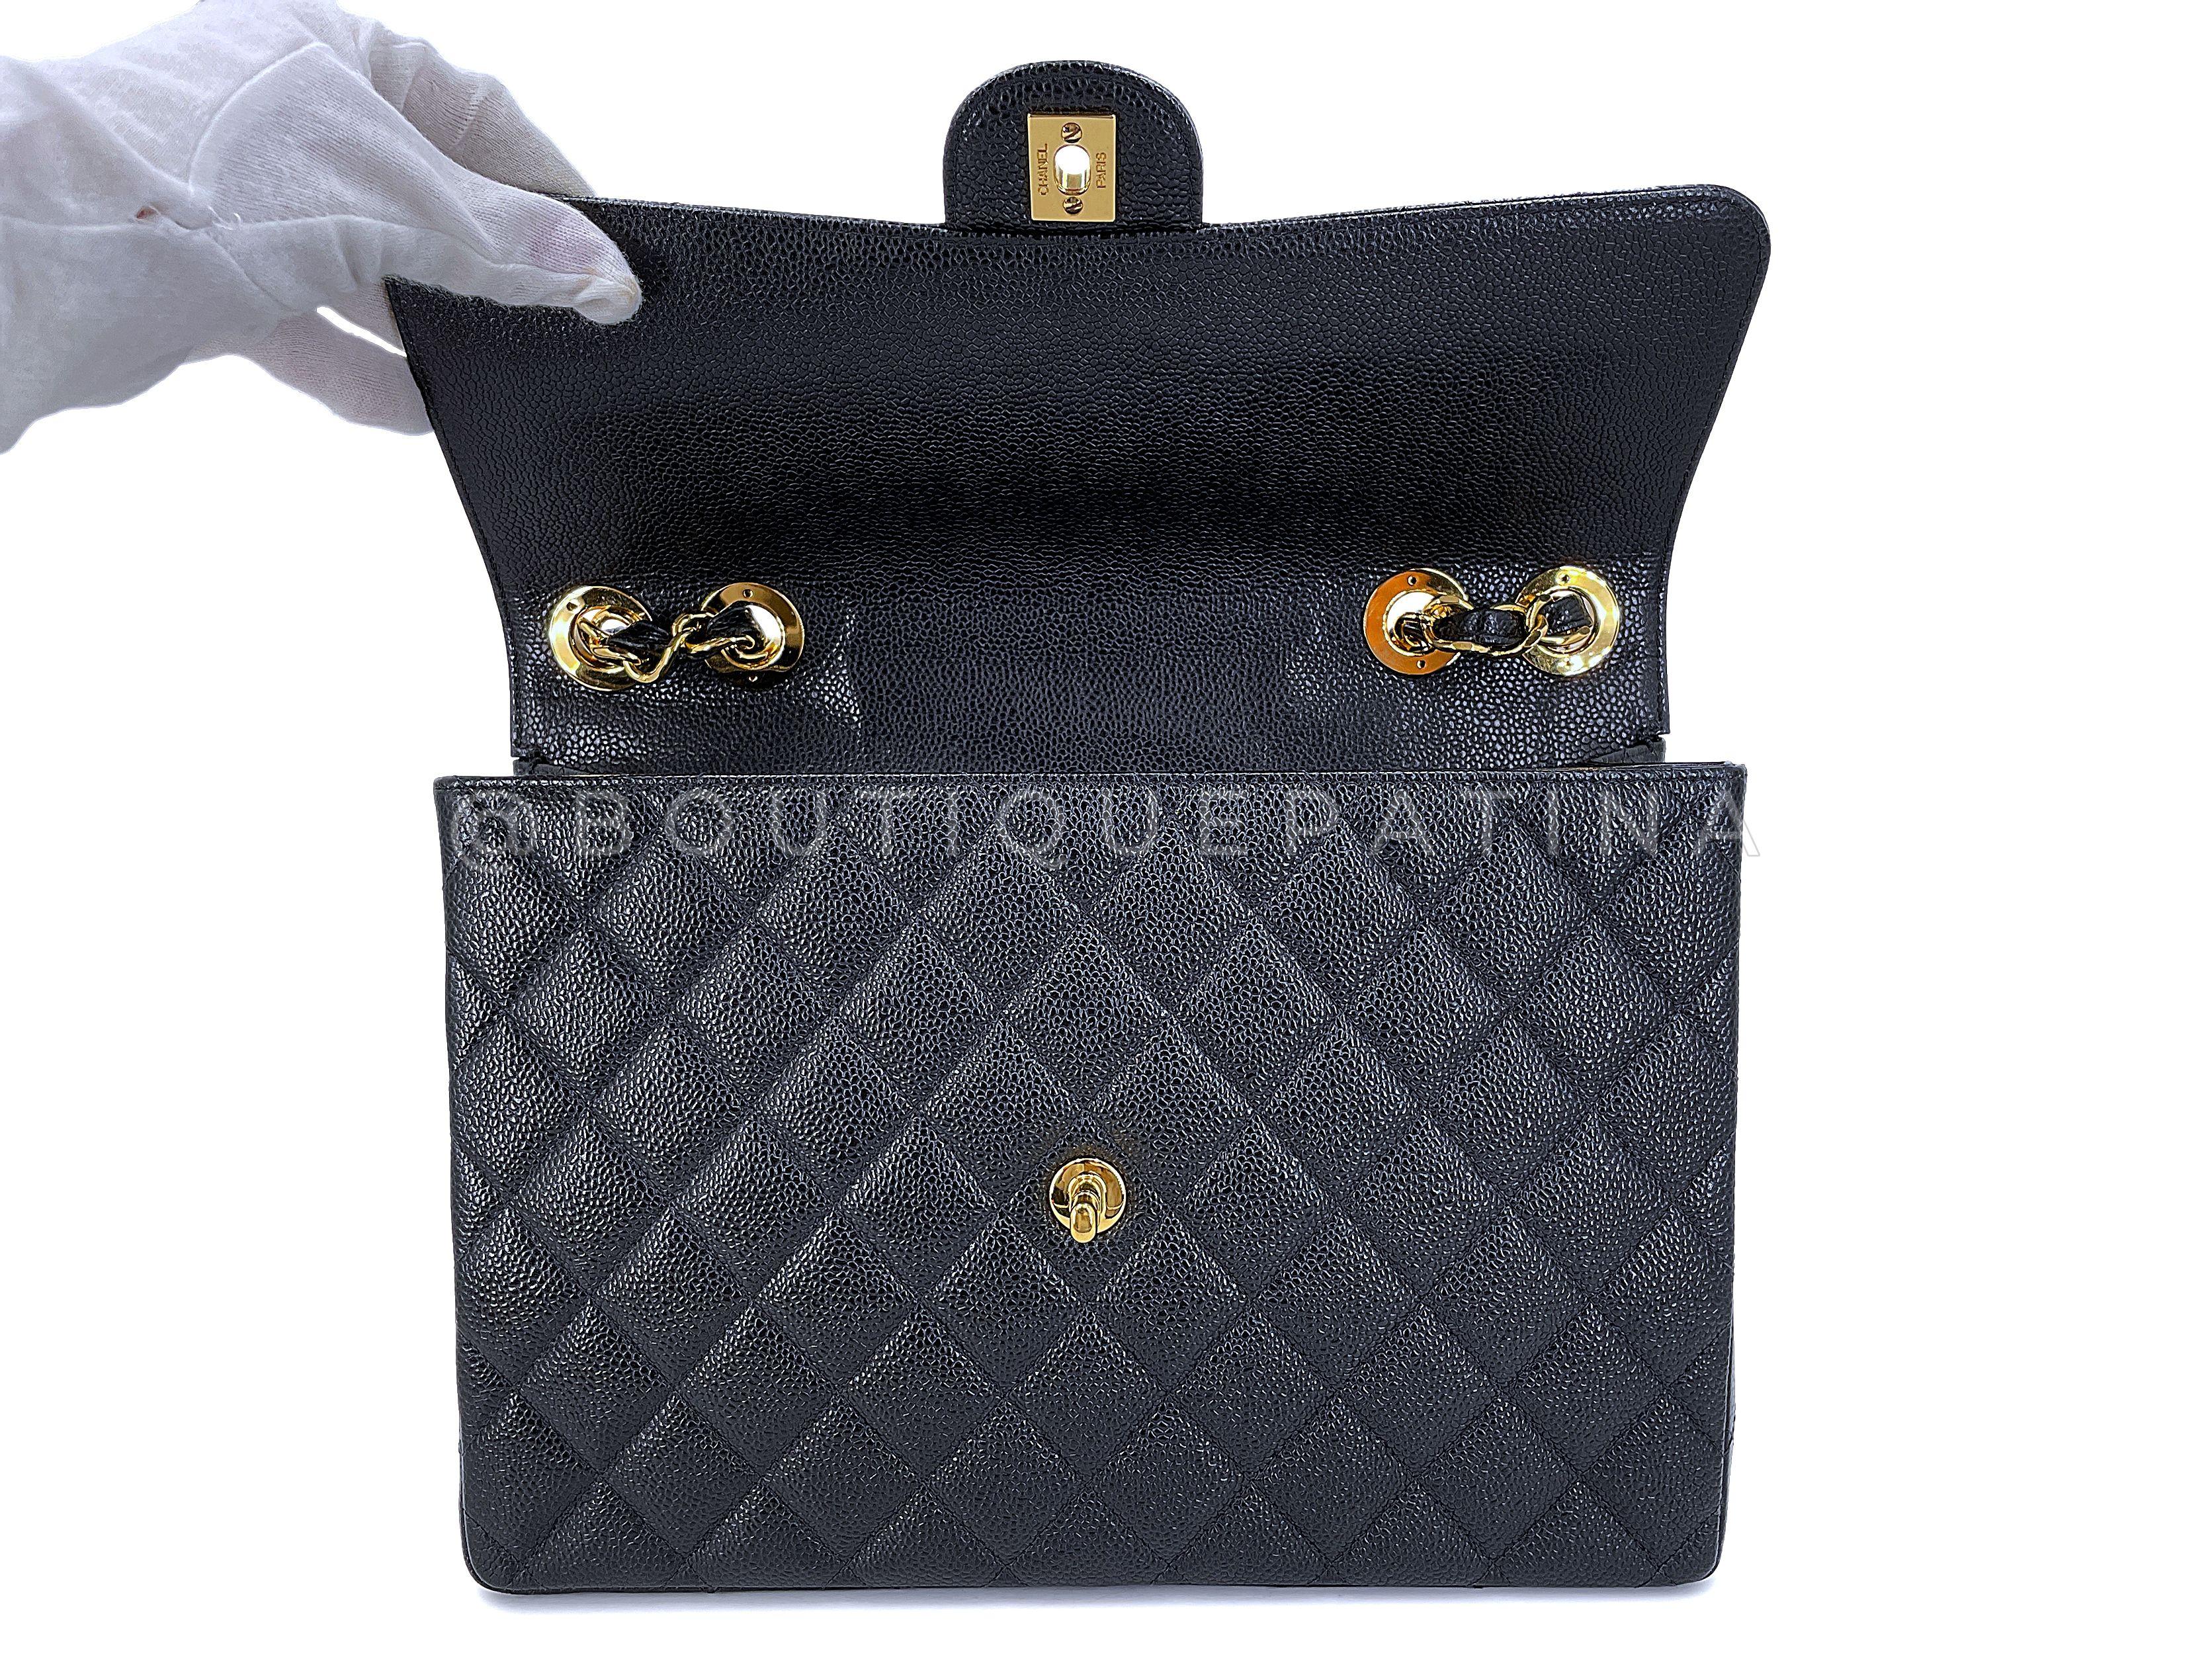 Pristine Chanel 2002 Vintage Black Caviar Jumbo Classic Flap Bag 24k GHW 67313 5